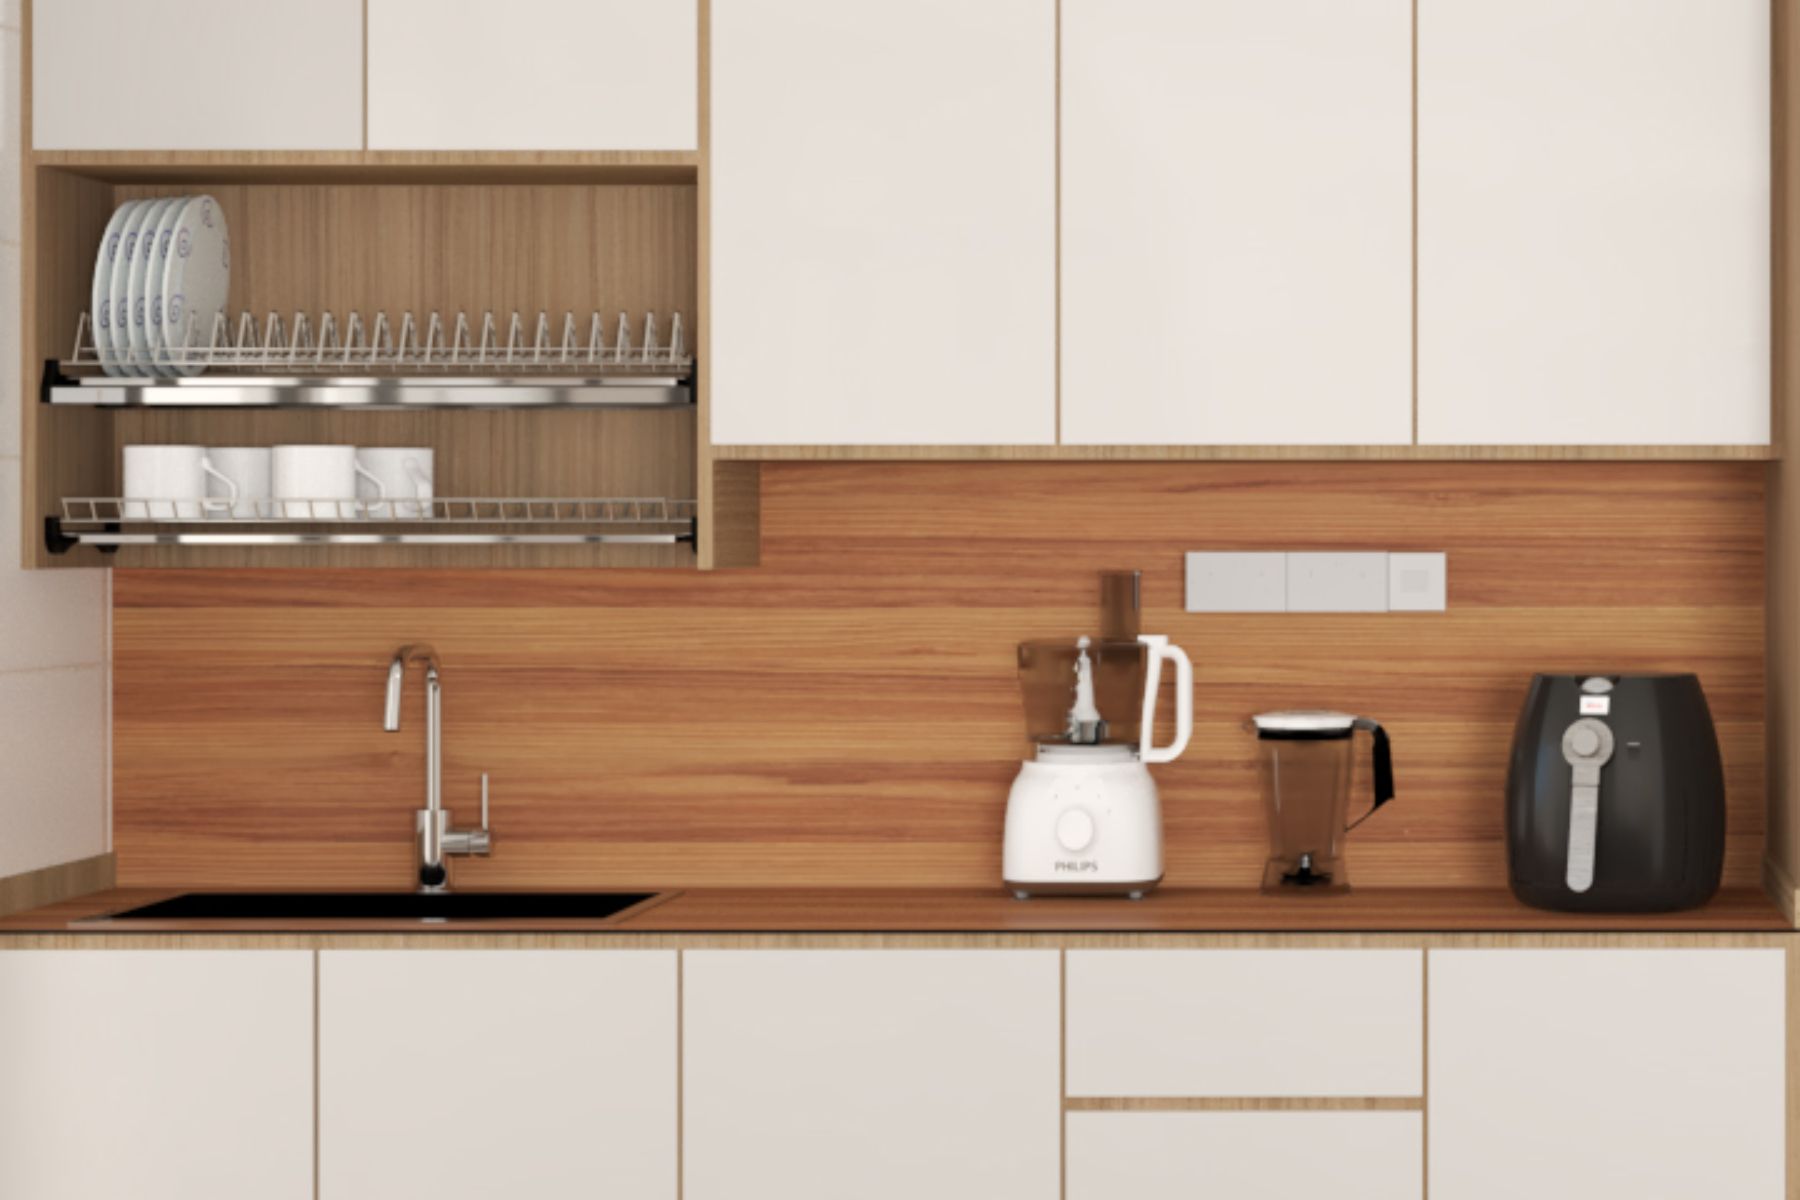 Scandinavian Kitchen Dado Tile Design With A Wooden Finish